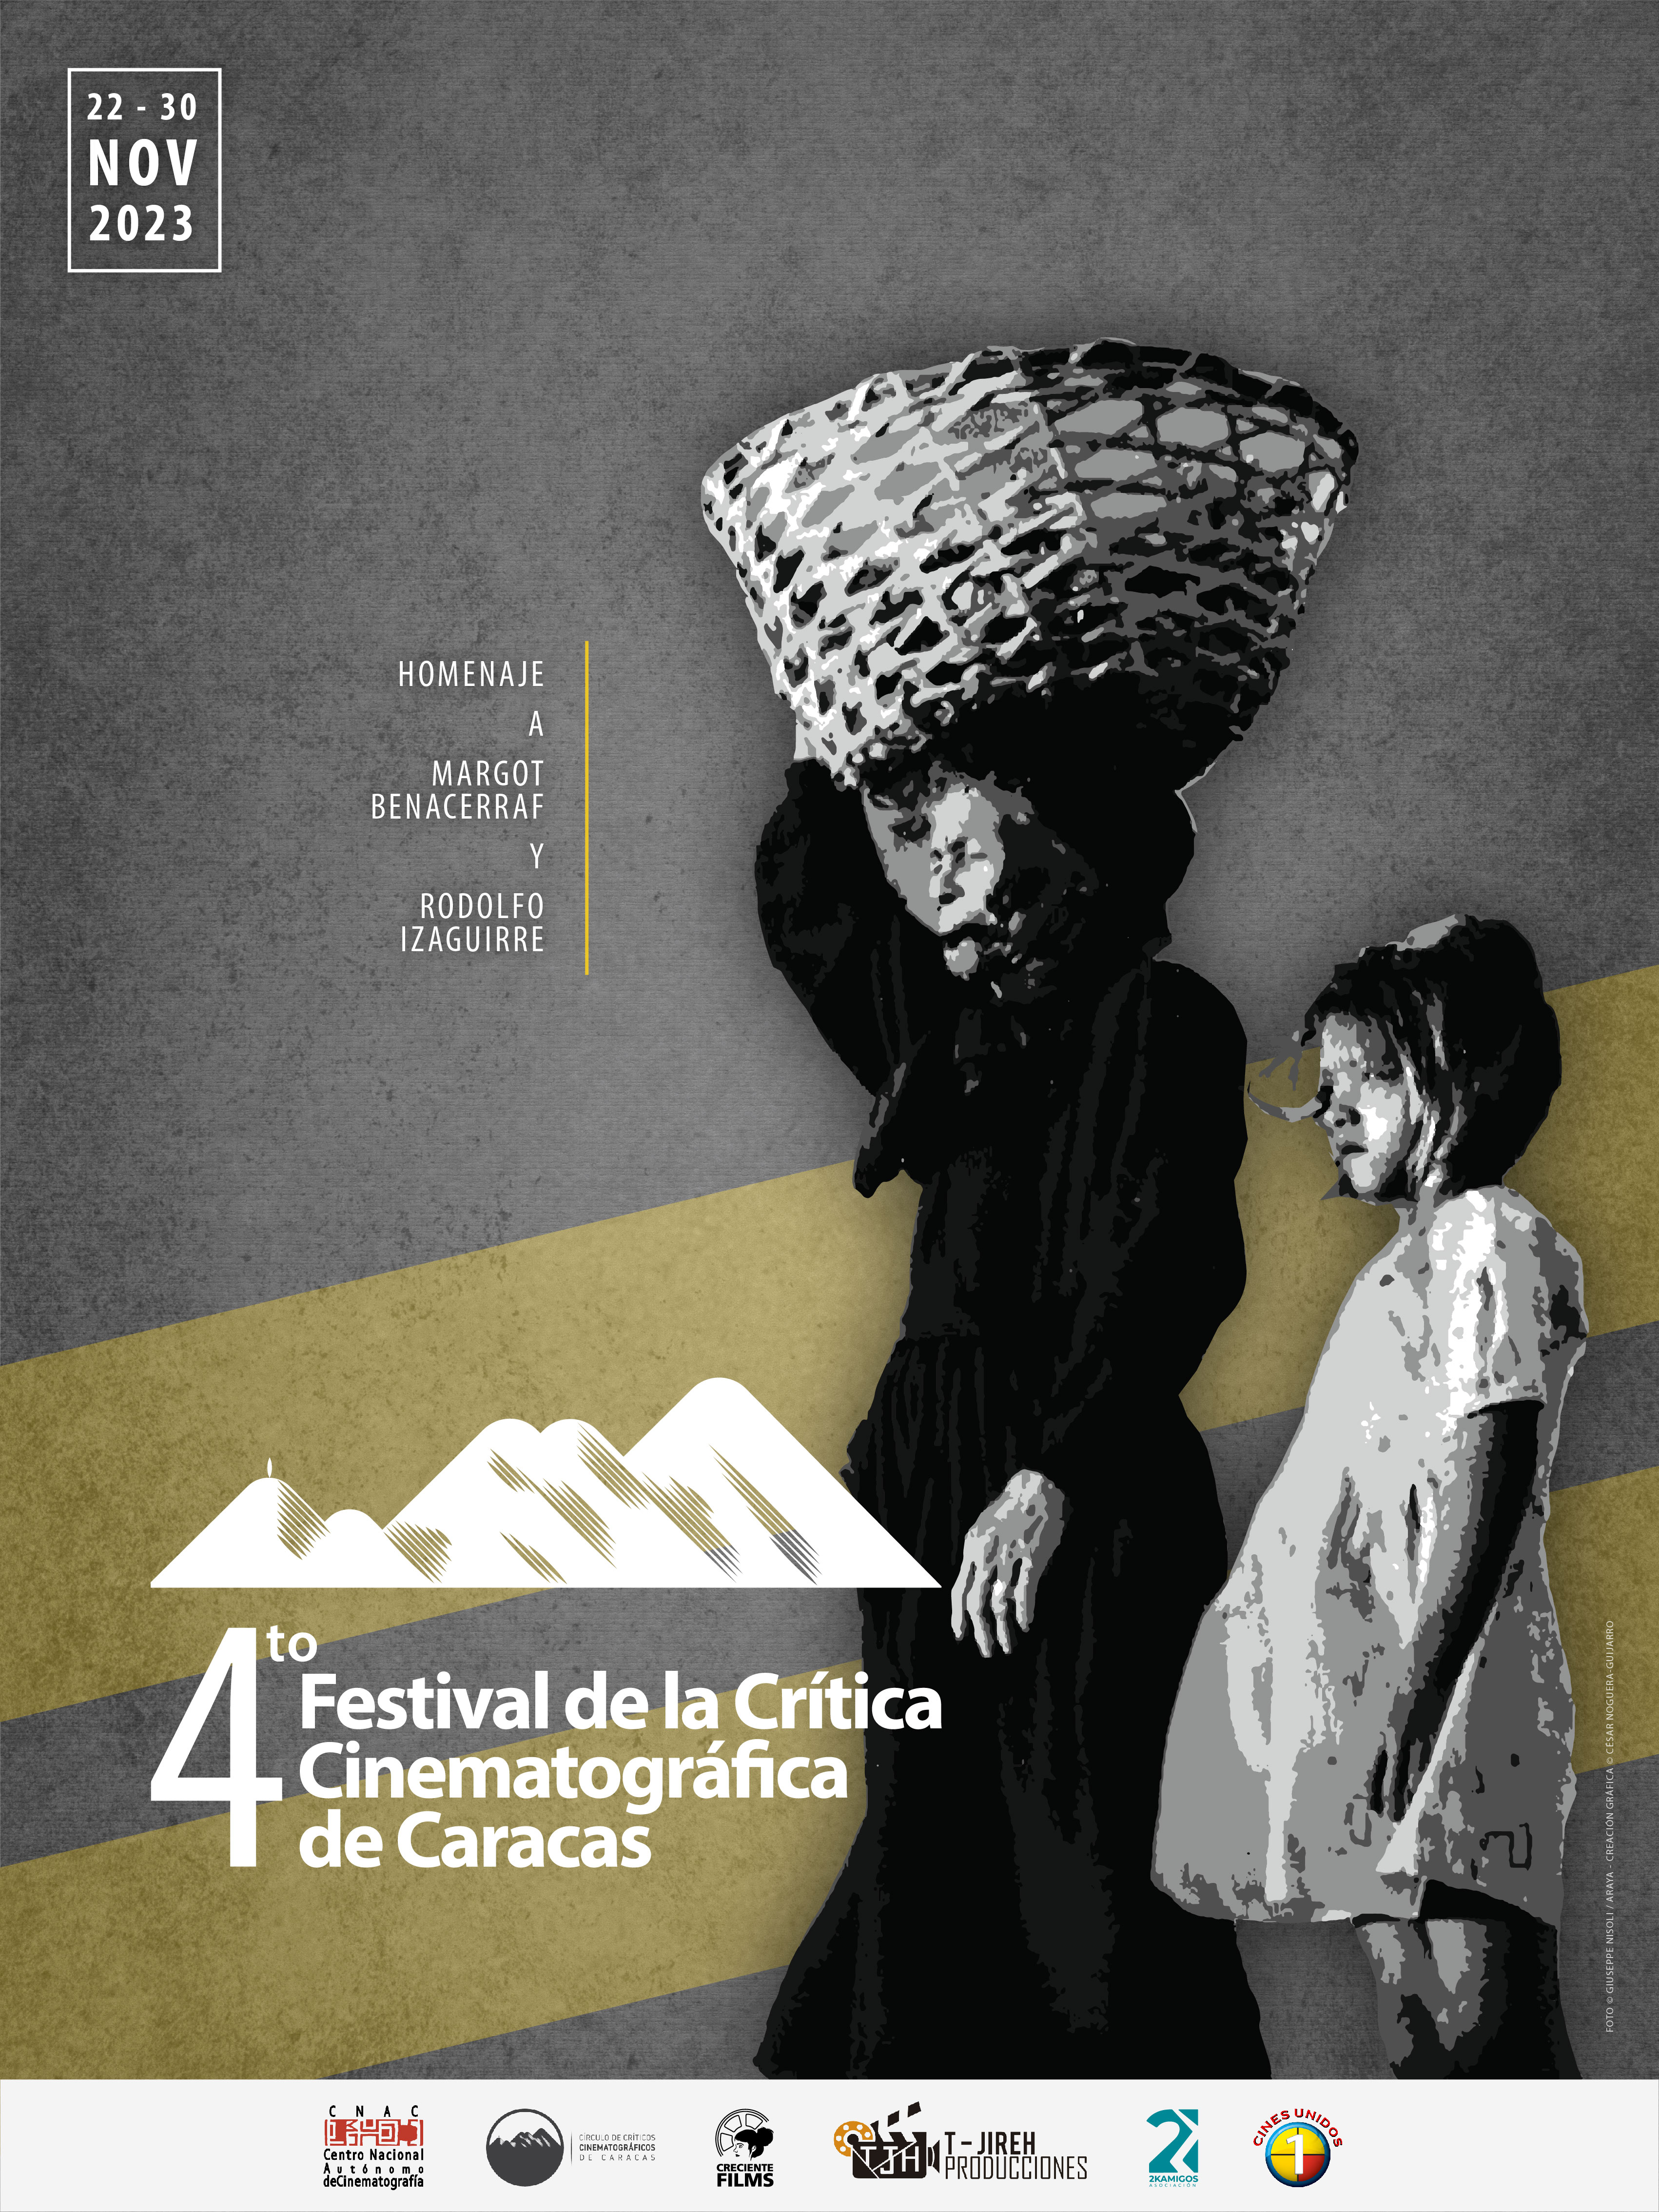 Festival de la Crítica Cinematográfica de Caracas